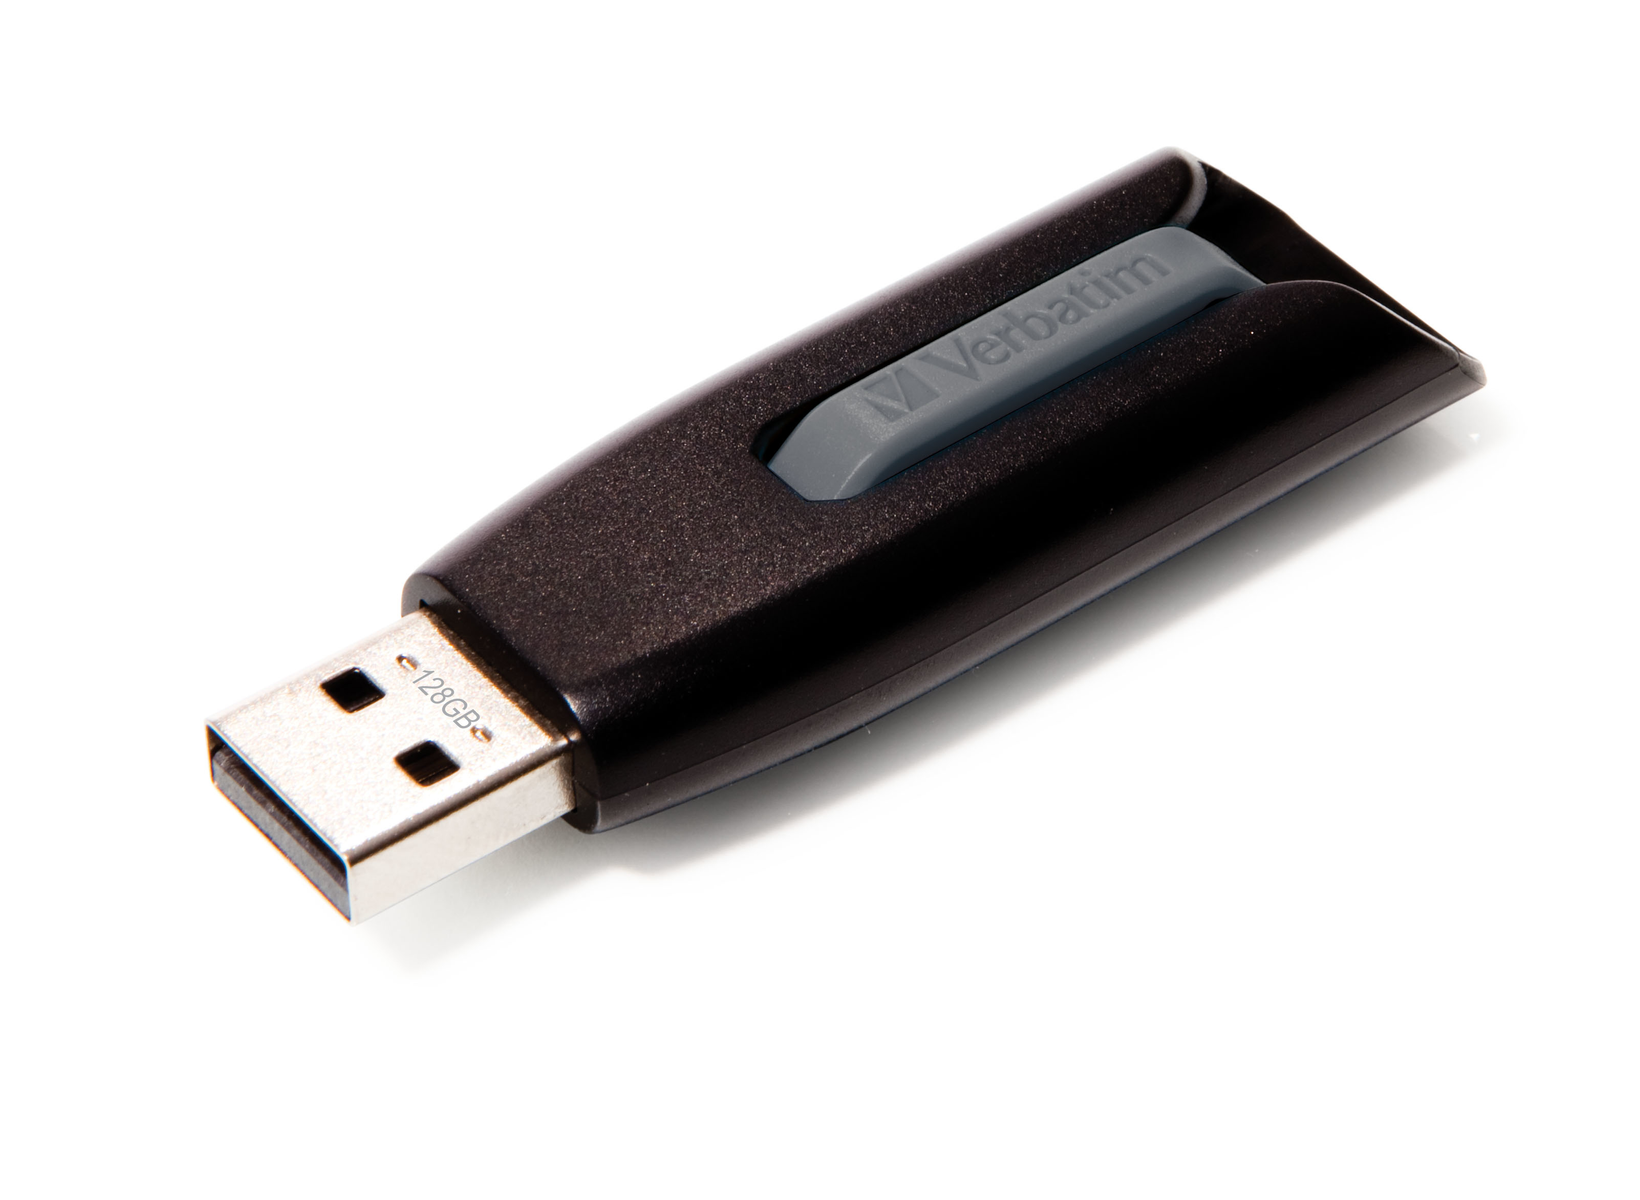 (Schwarz, GB) Drive VERBATIM USB 128 49189